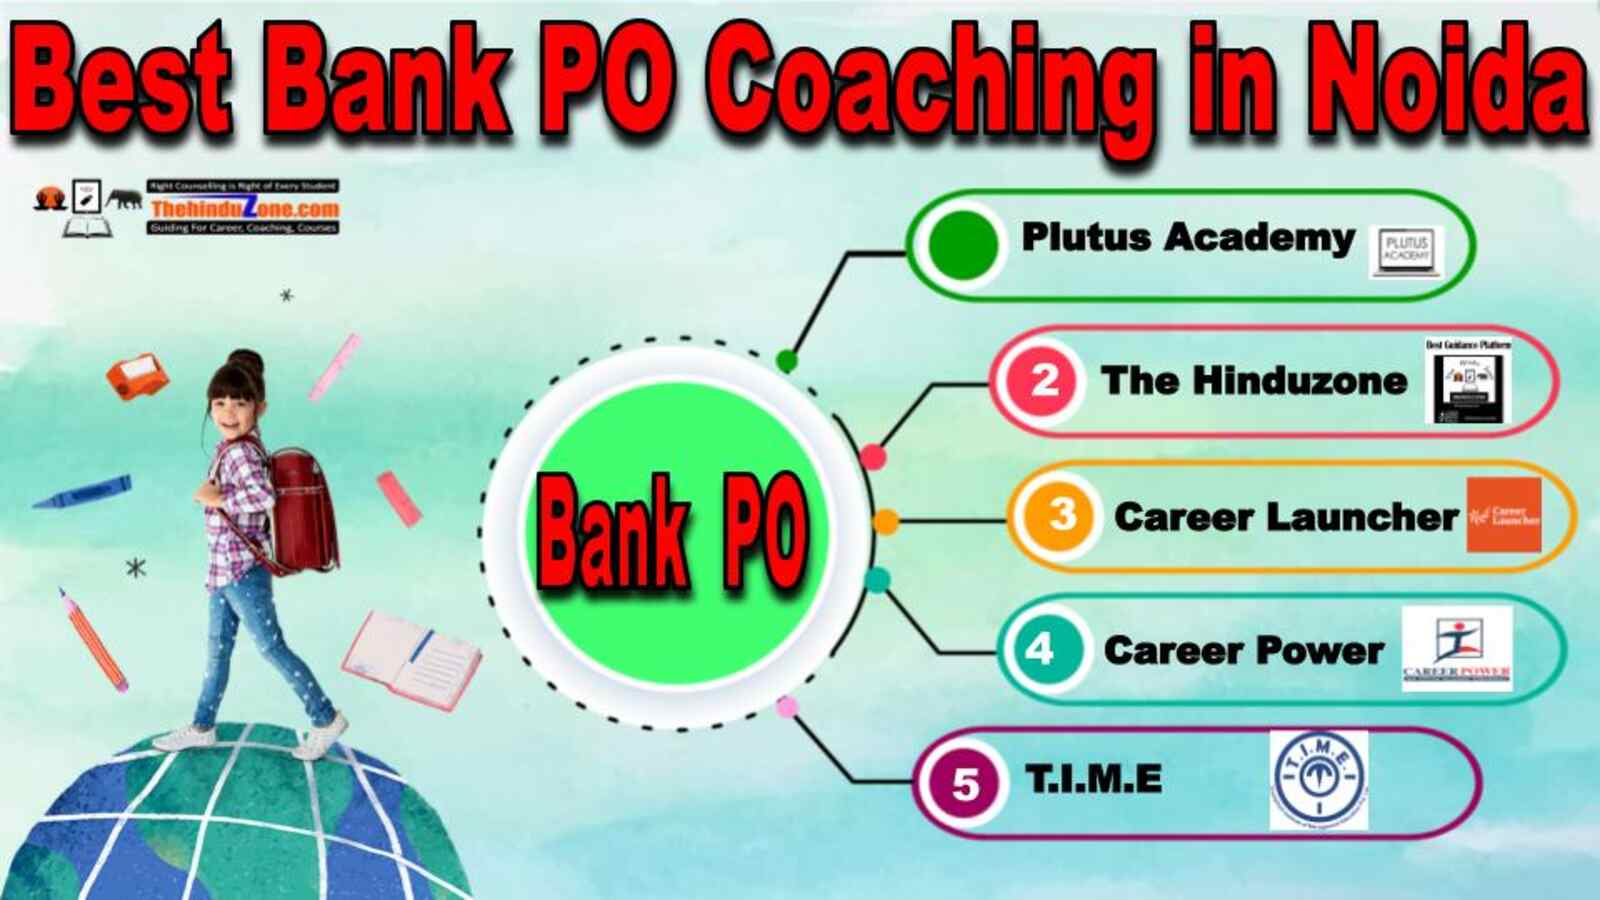 Best Bank PO Coaching in Noida